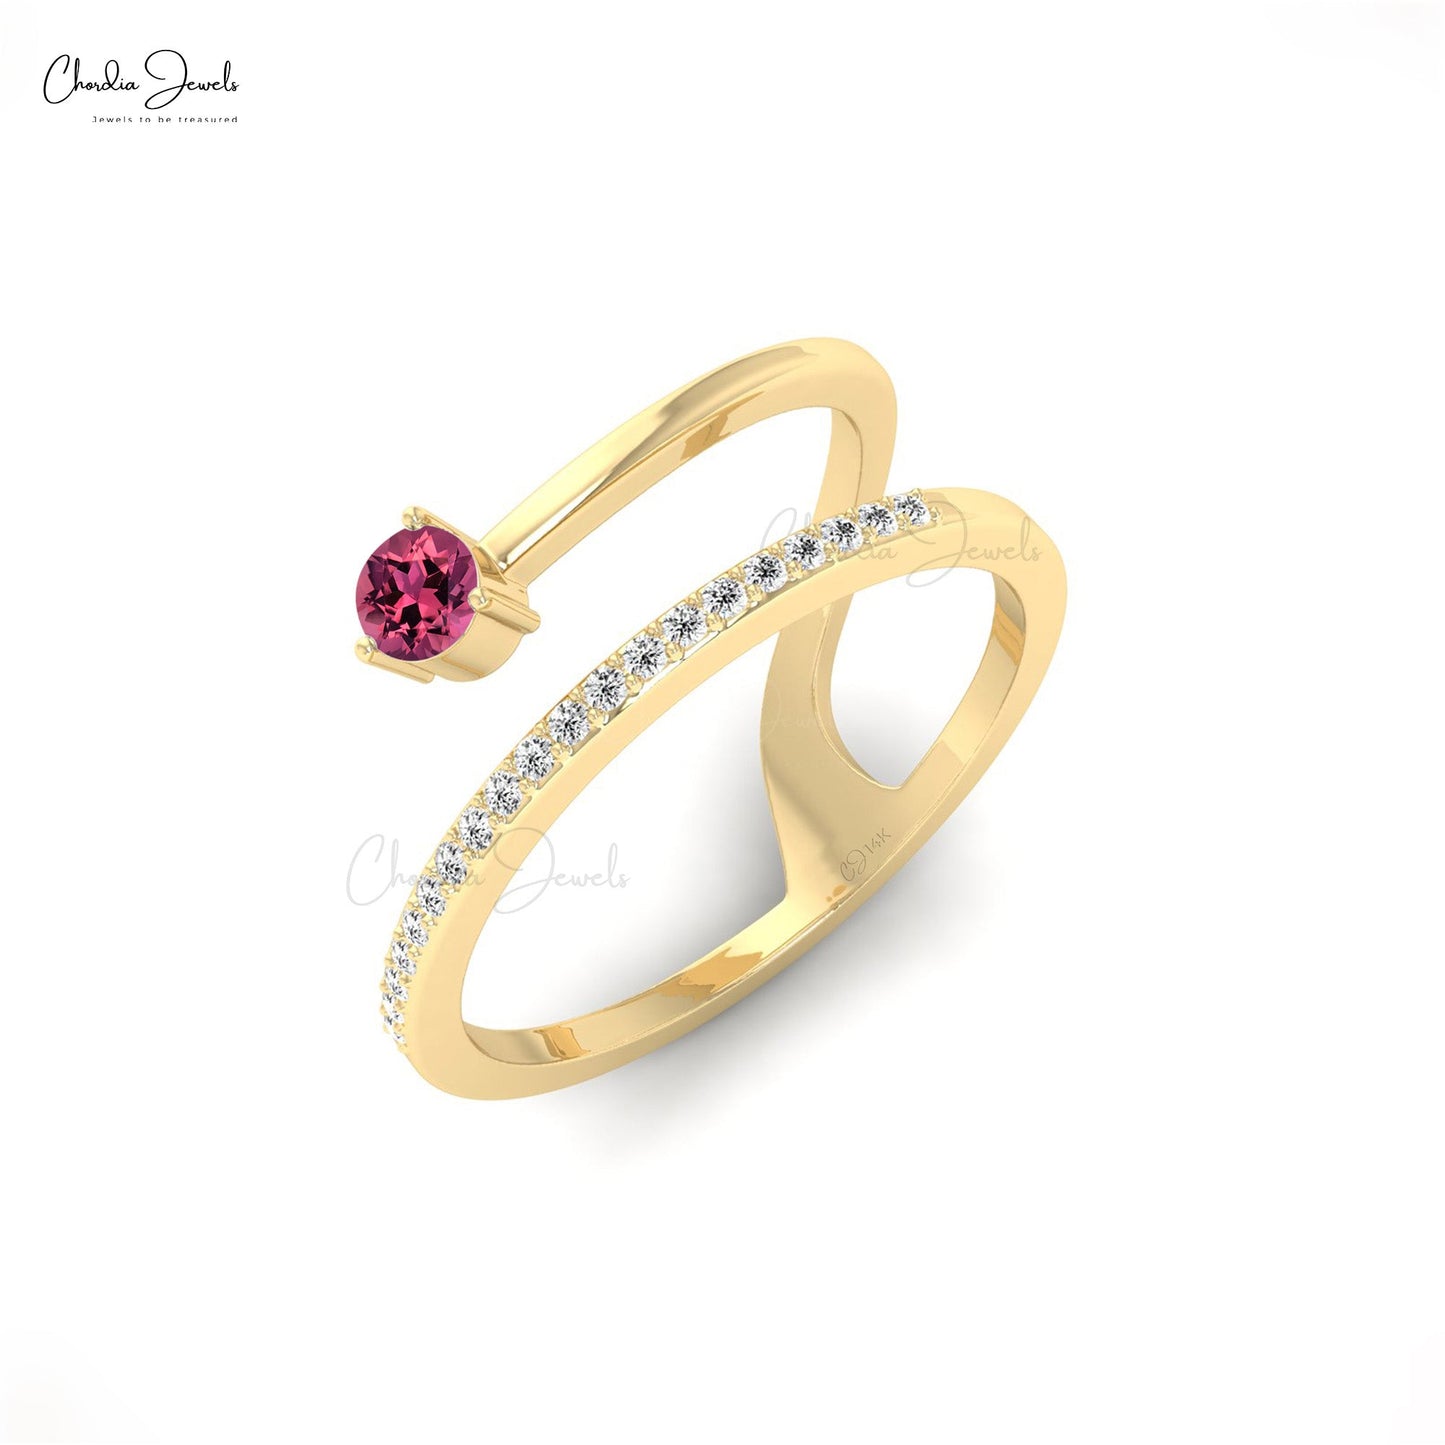 Pink Tourmaline Dainty Engagement Ring with Pave Diamond Setting